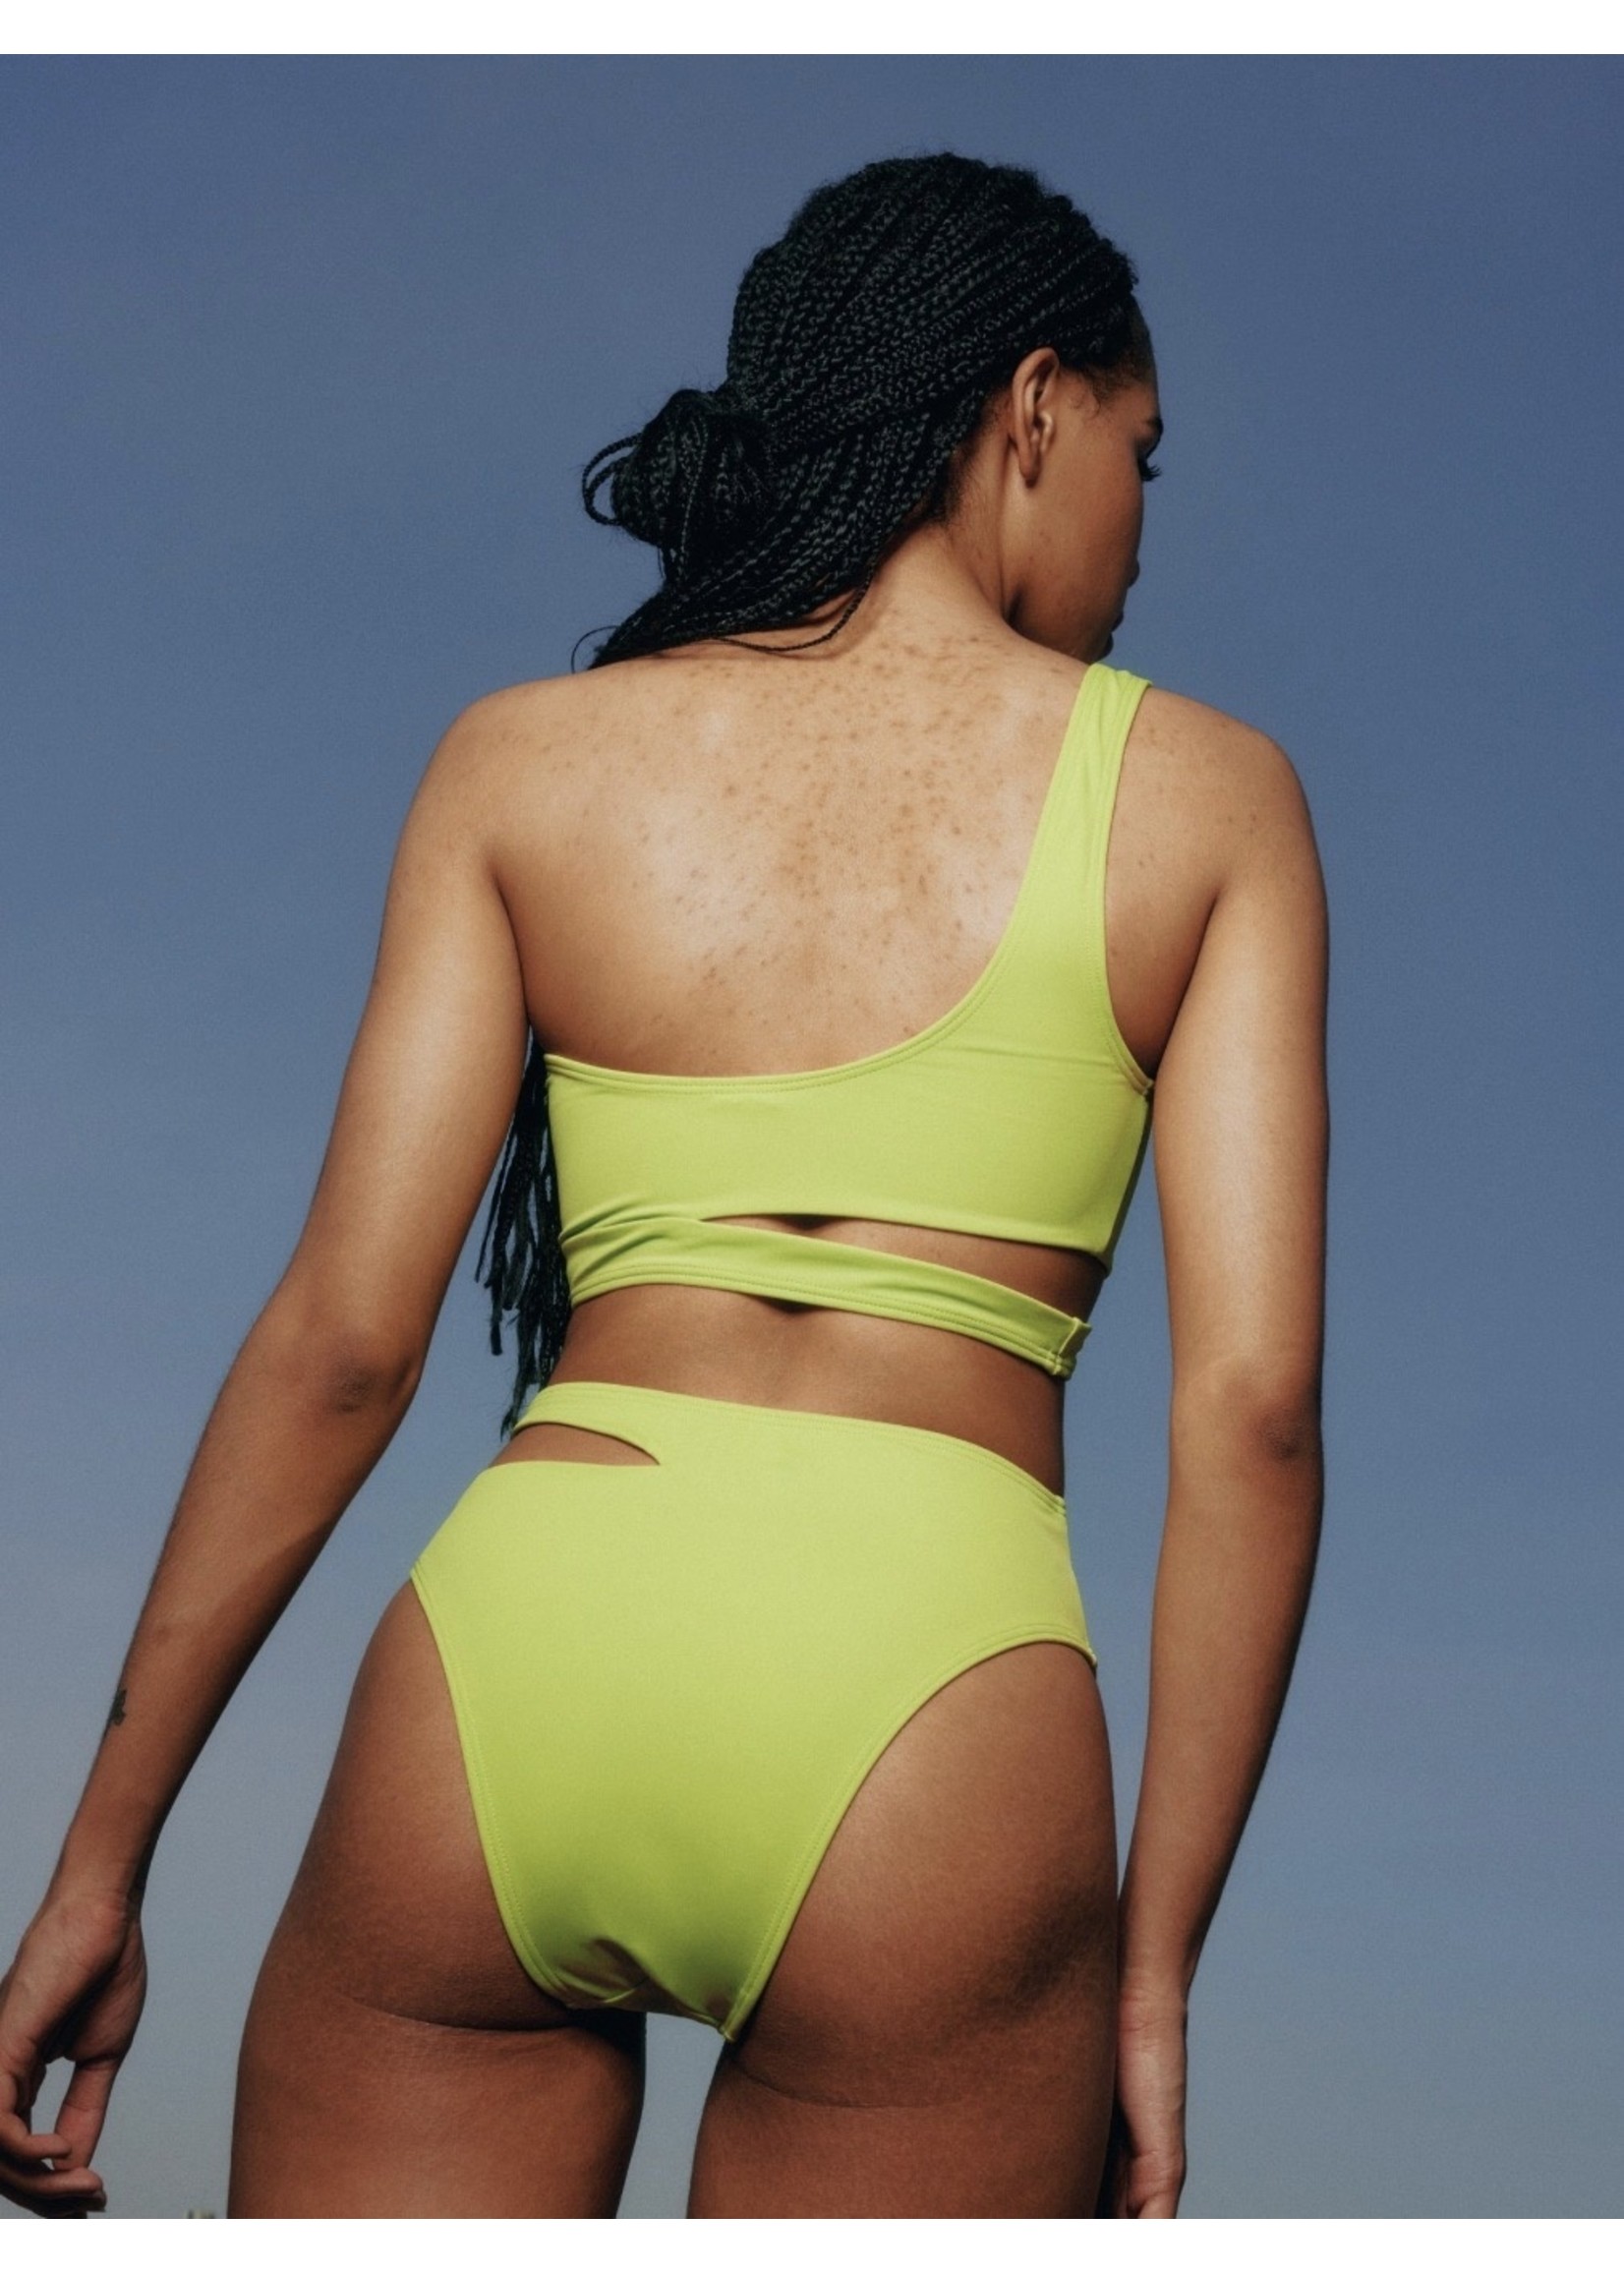 Blush Lingerie 'Jade' Asymmetric Bikini Top by Blush Lingerie